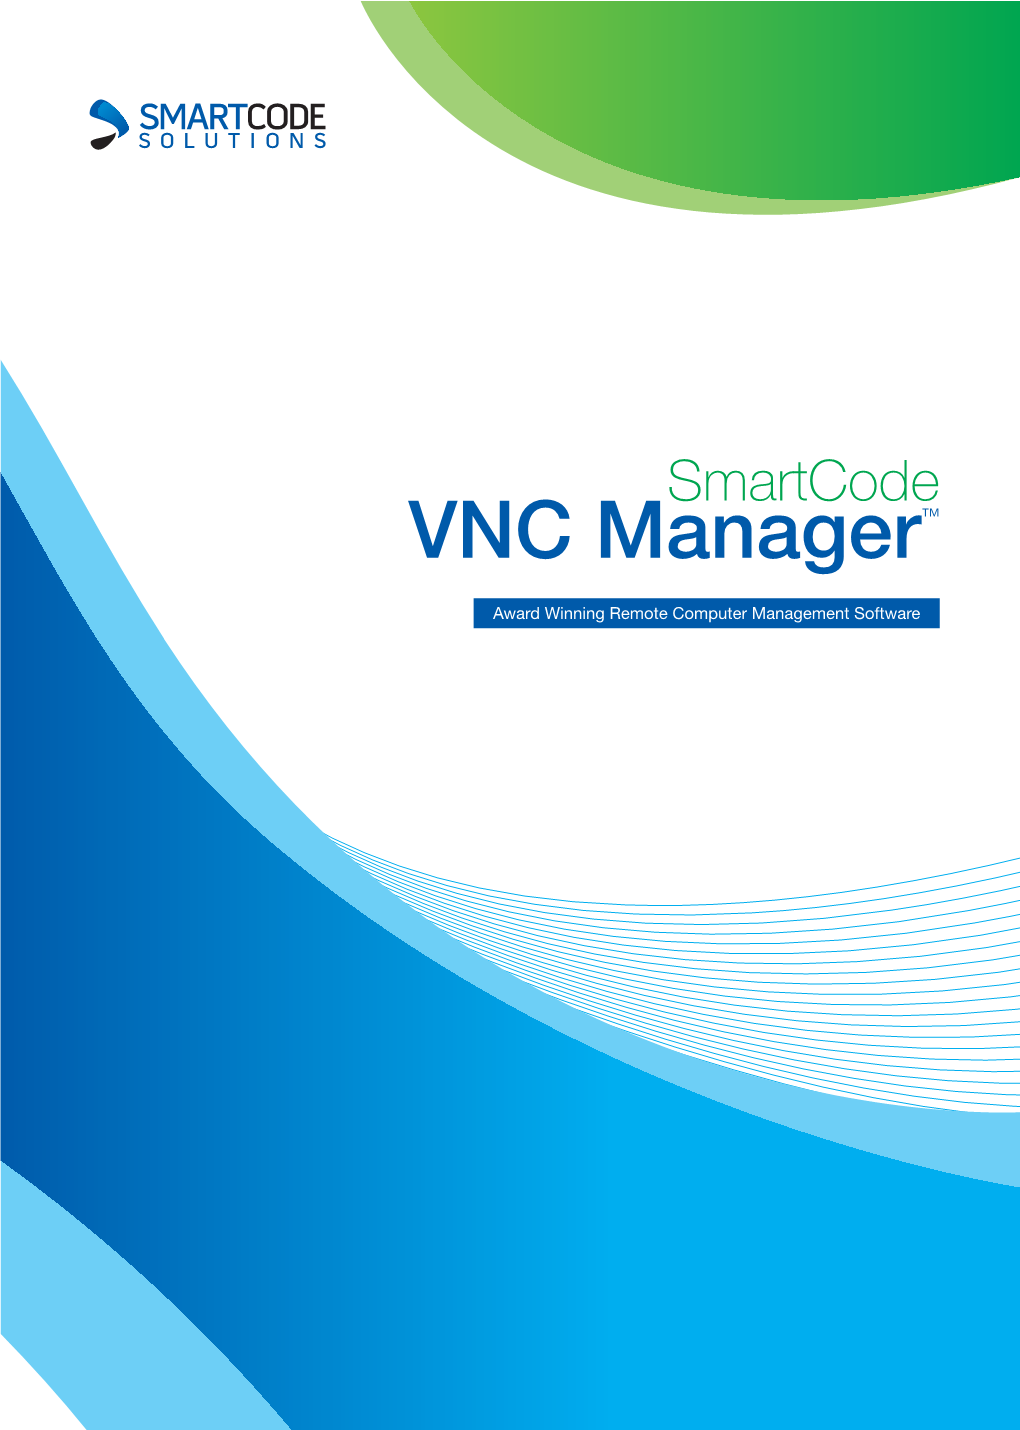 Smartcode VNC Manager ™